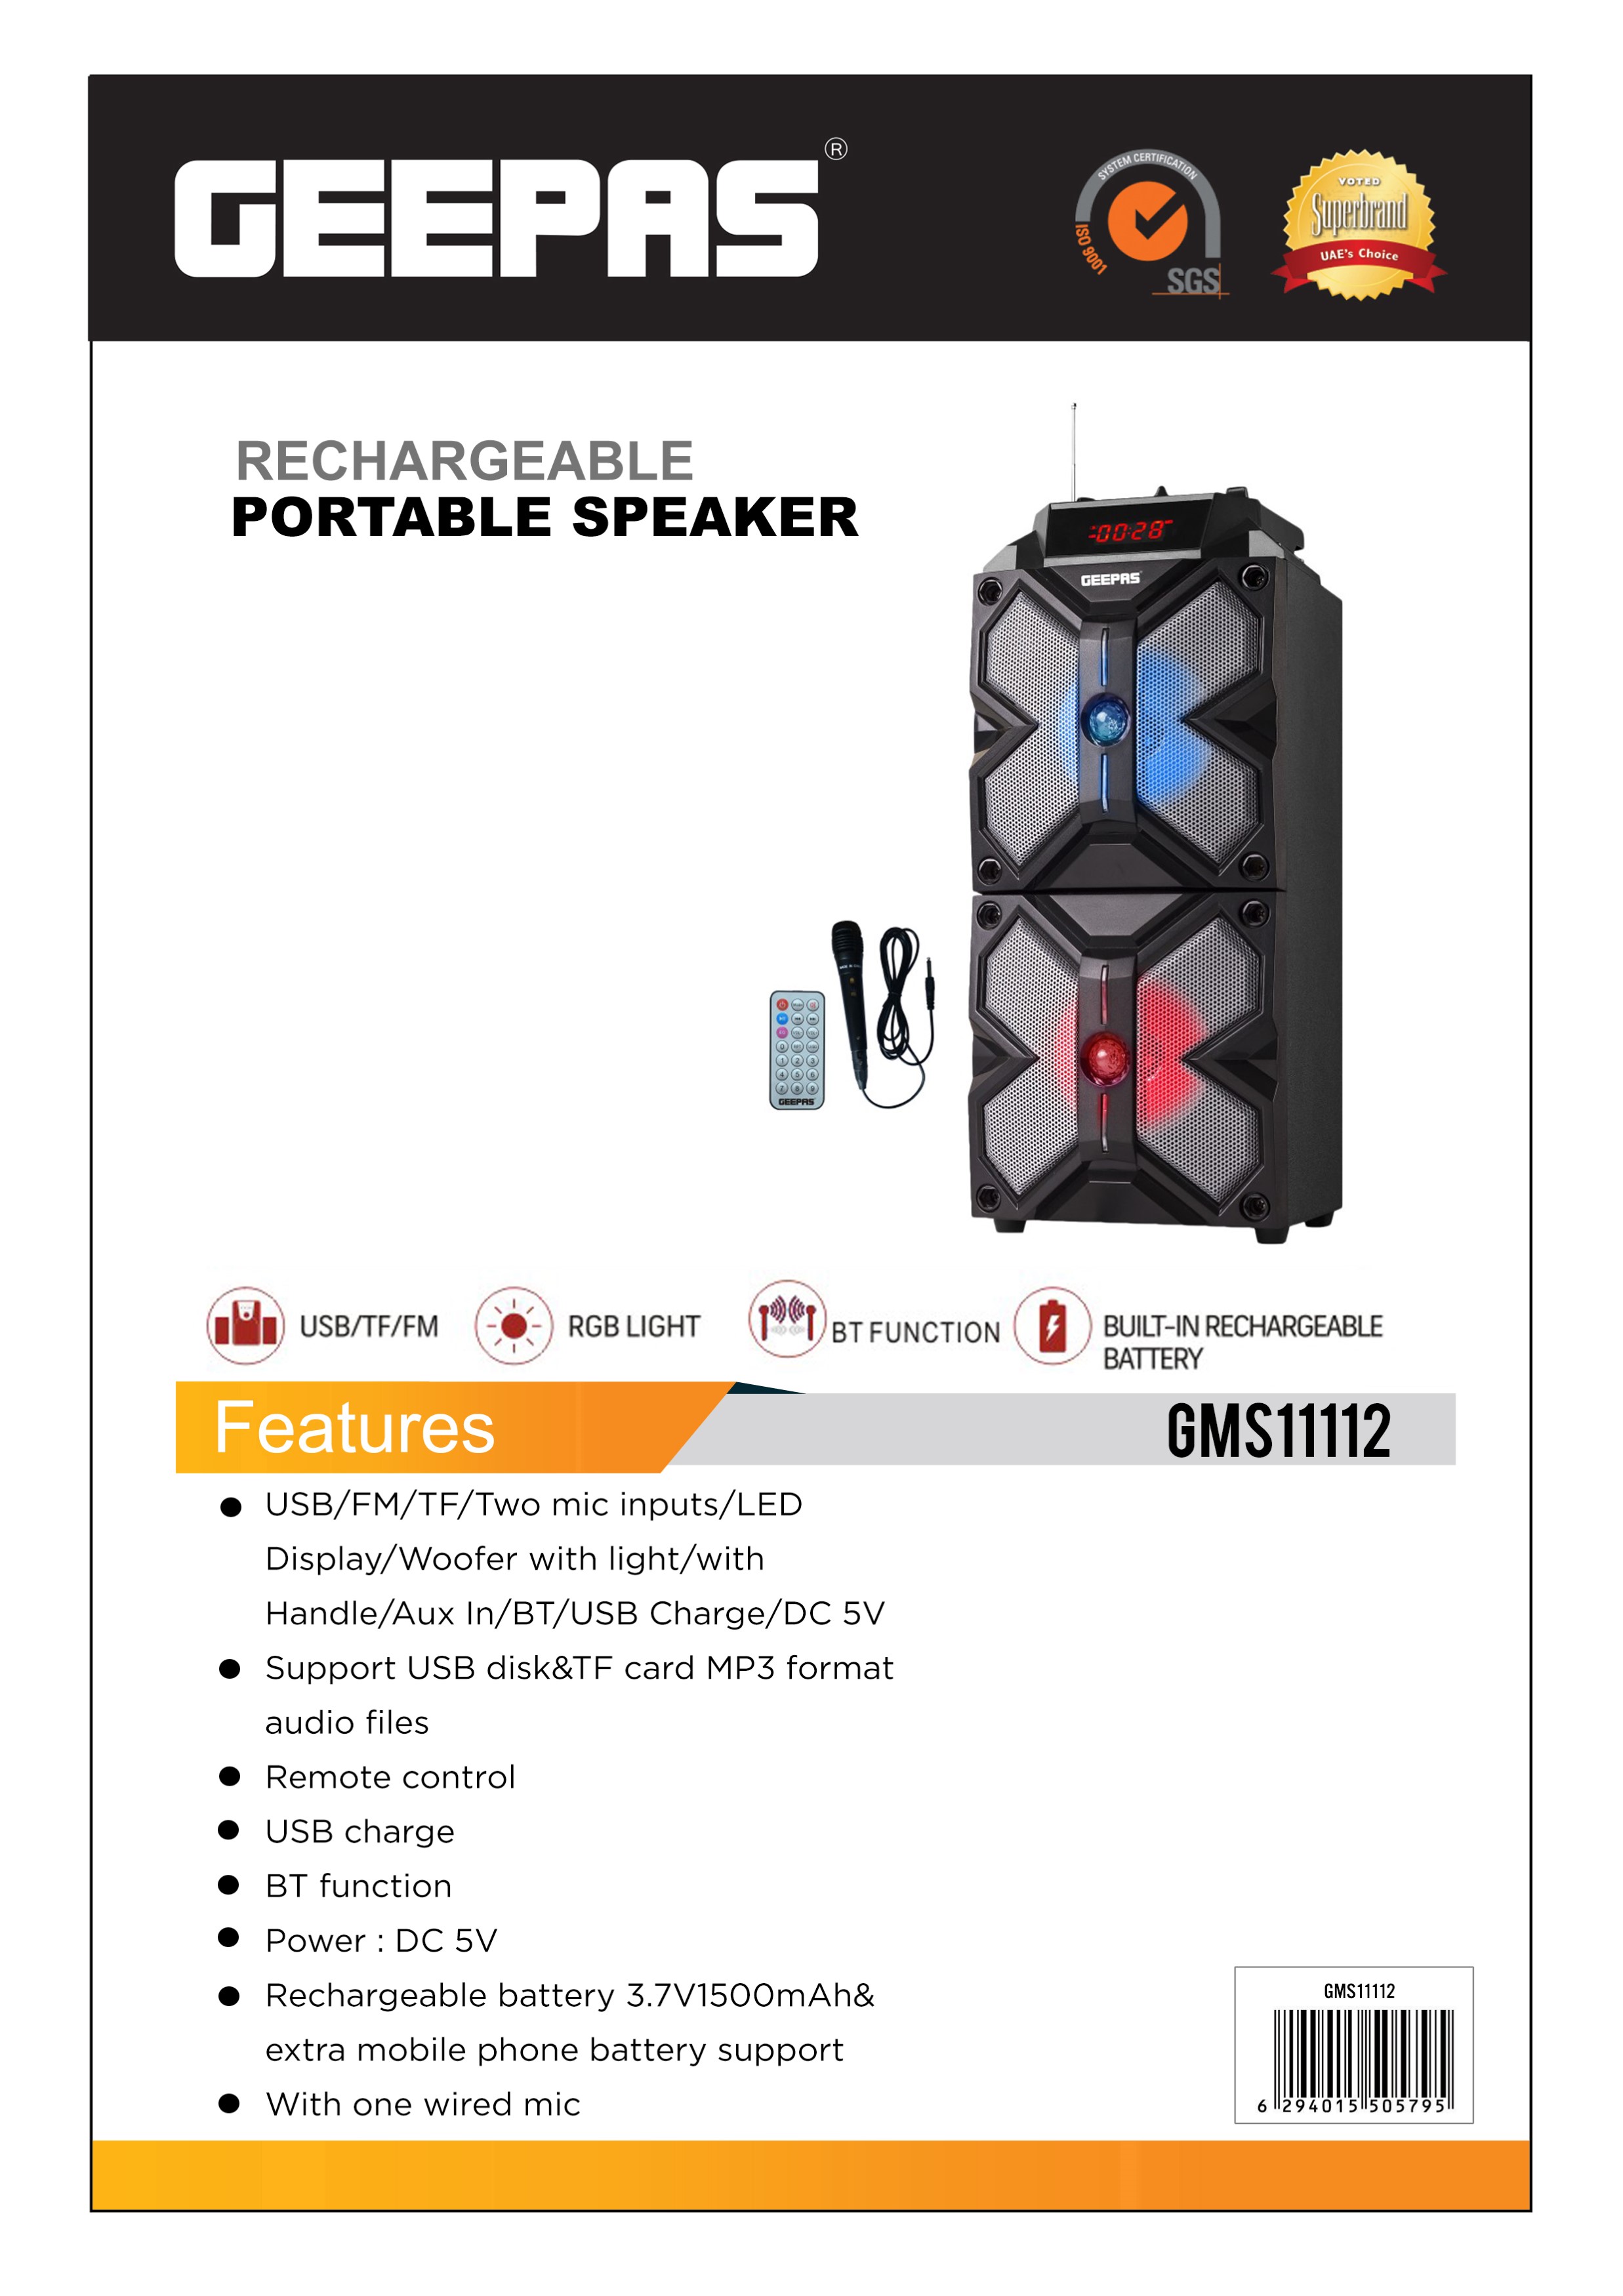 Geepas GMS11112 Rechargeable Portable Speaker - 2600 mAh Battery